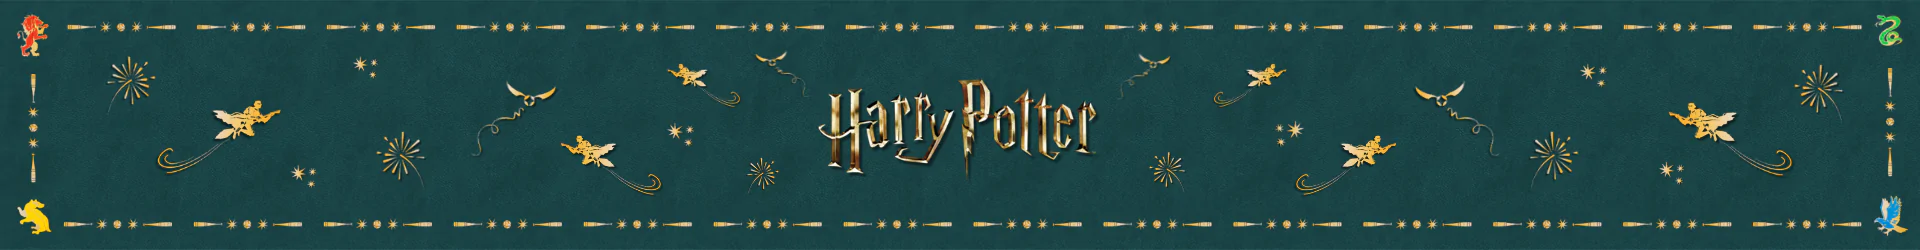 Harry Potter cuccok termékek banner